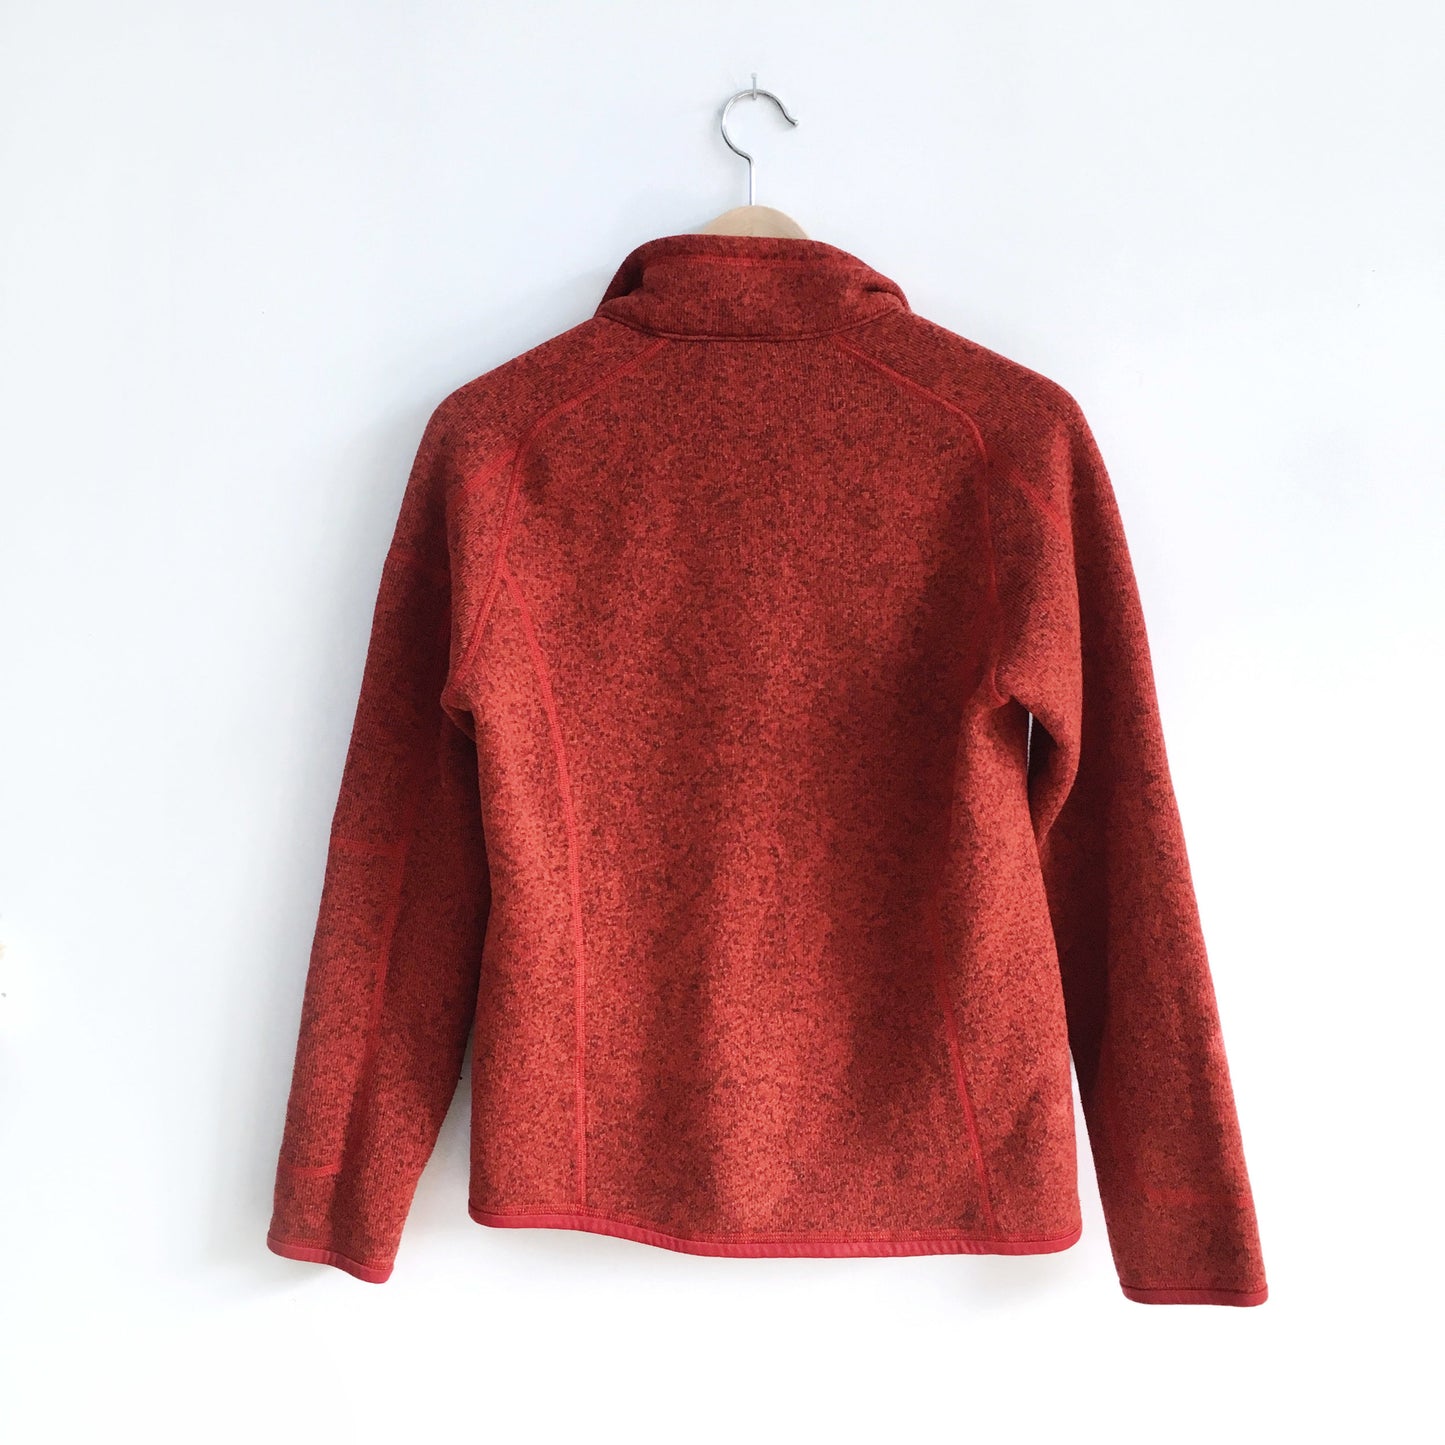 Patagonia Better Sweater 1/4 Fleece - size Medium